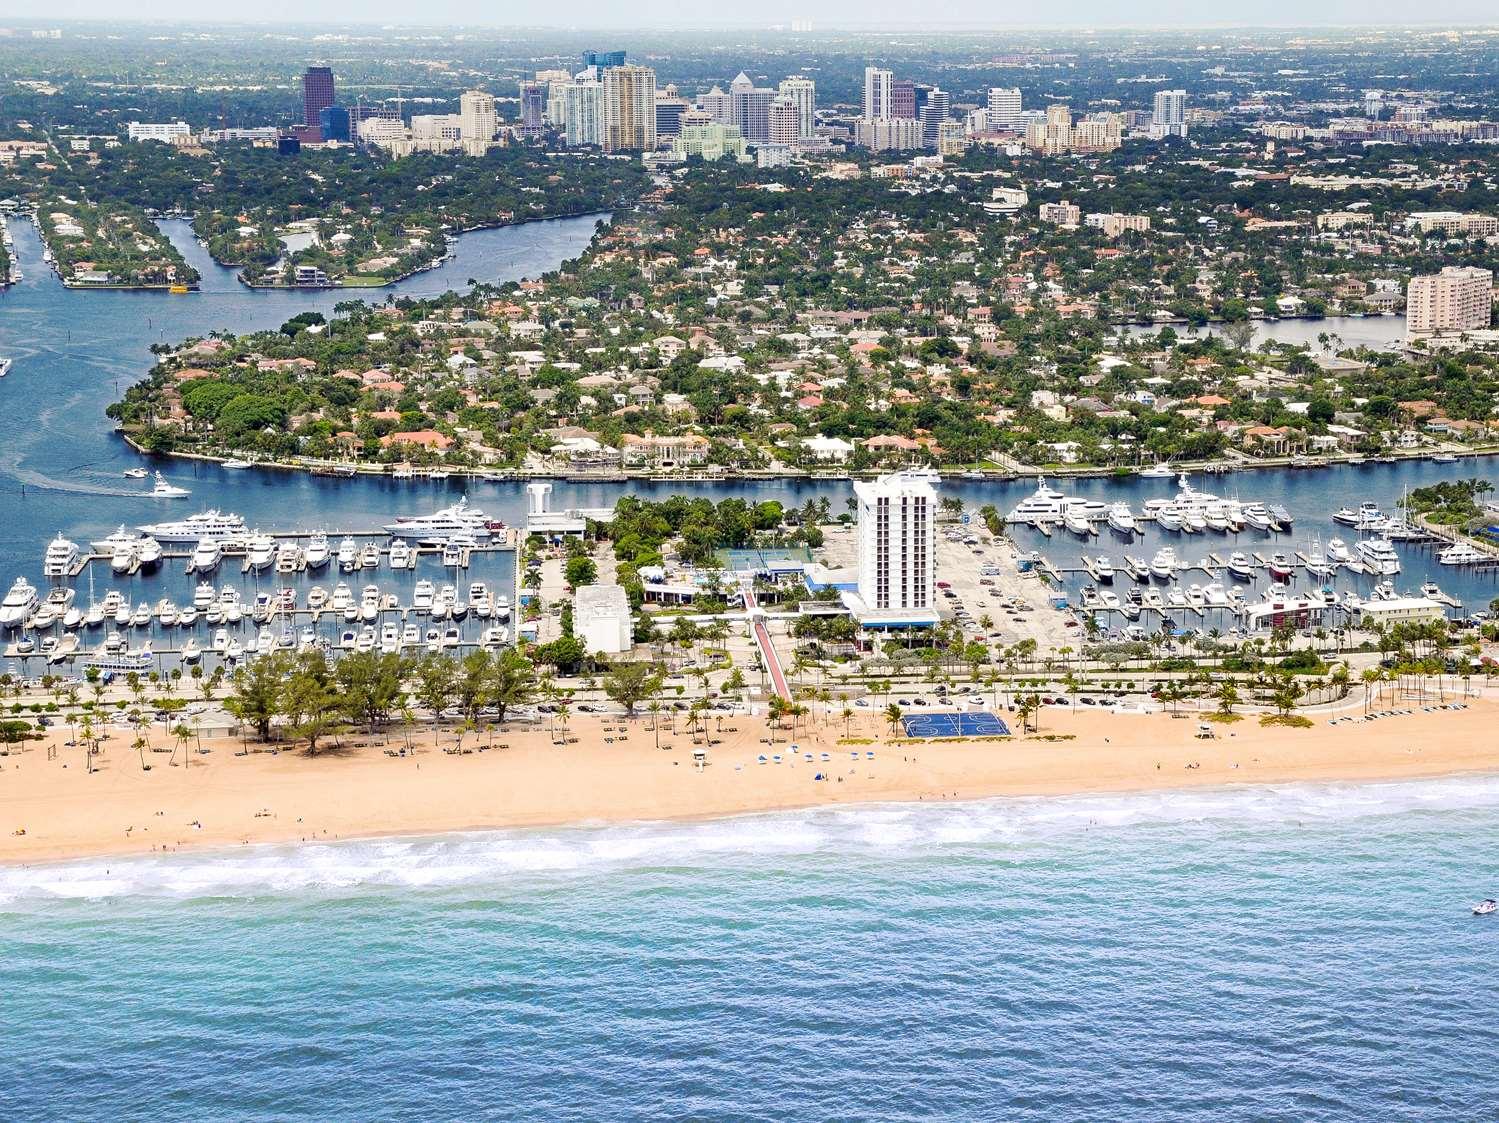 Bahia Mar Fort Lauderdale Beach - a DoubleTree by Hilton Hotel in Fort Lauderdale, FL